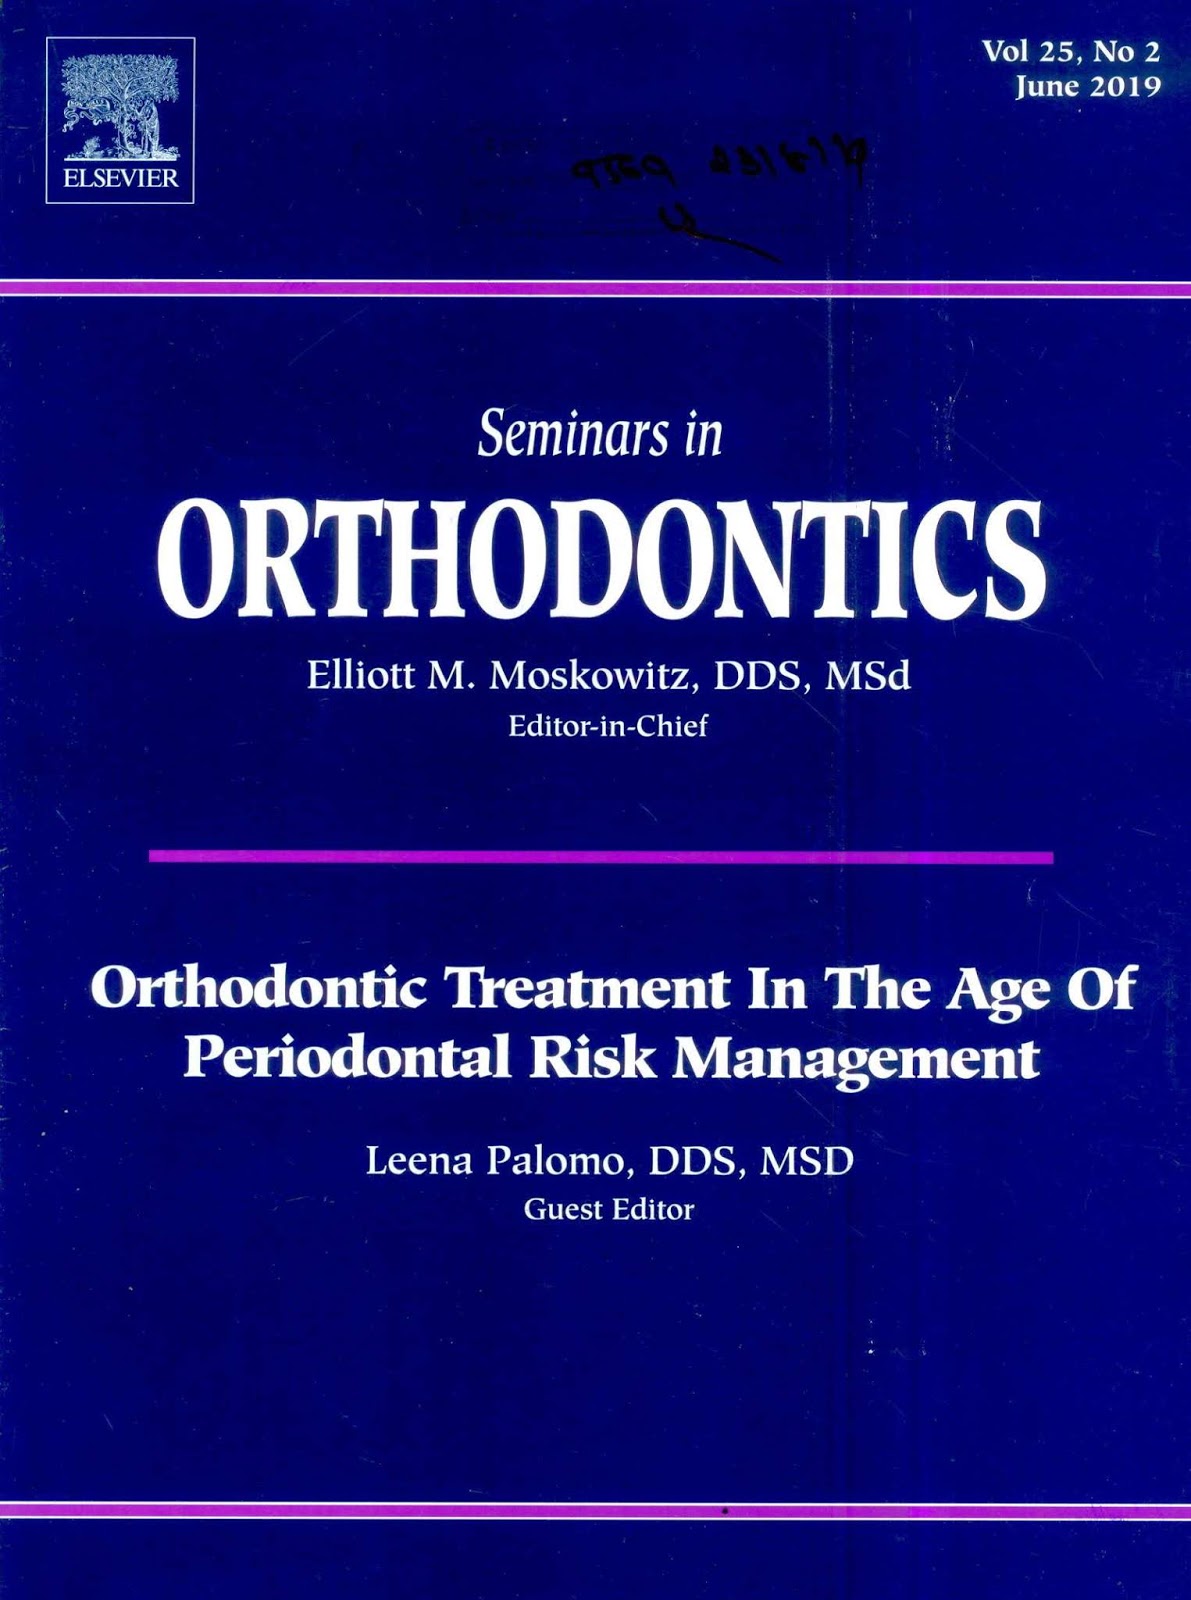 https://www.sciencedirect.com/journal/seminars-in-orthodontics/vol/25/issue/2